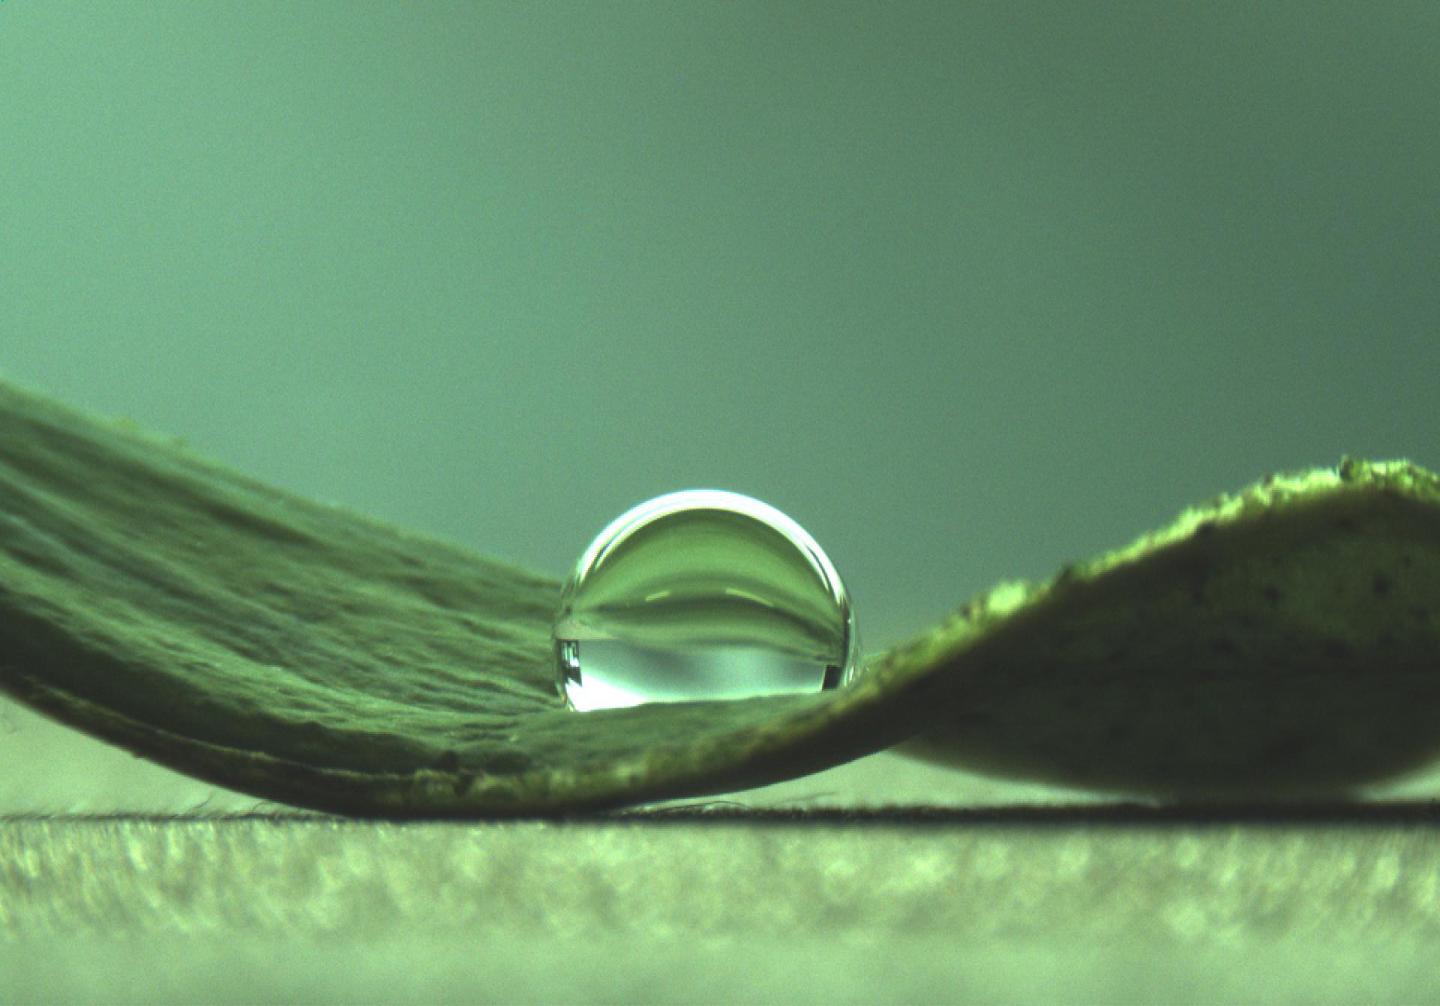 Water Droplets on a Lotus Leaf